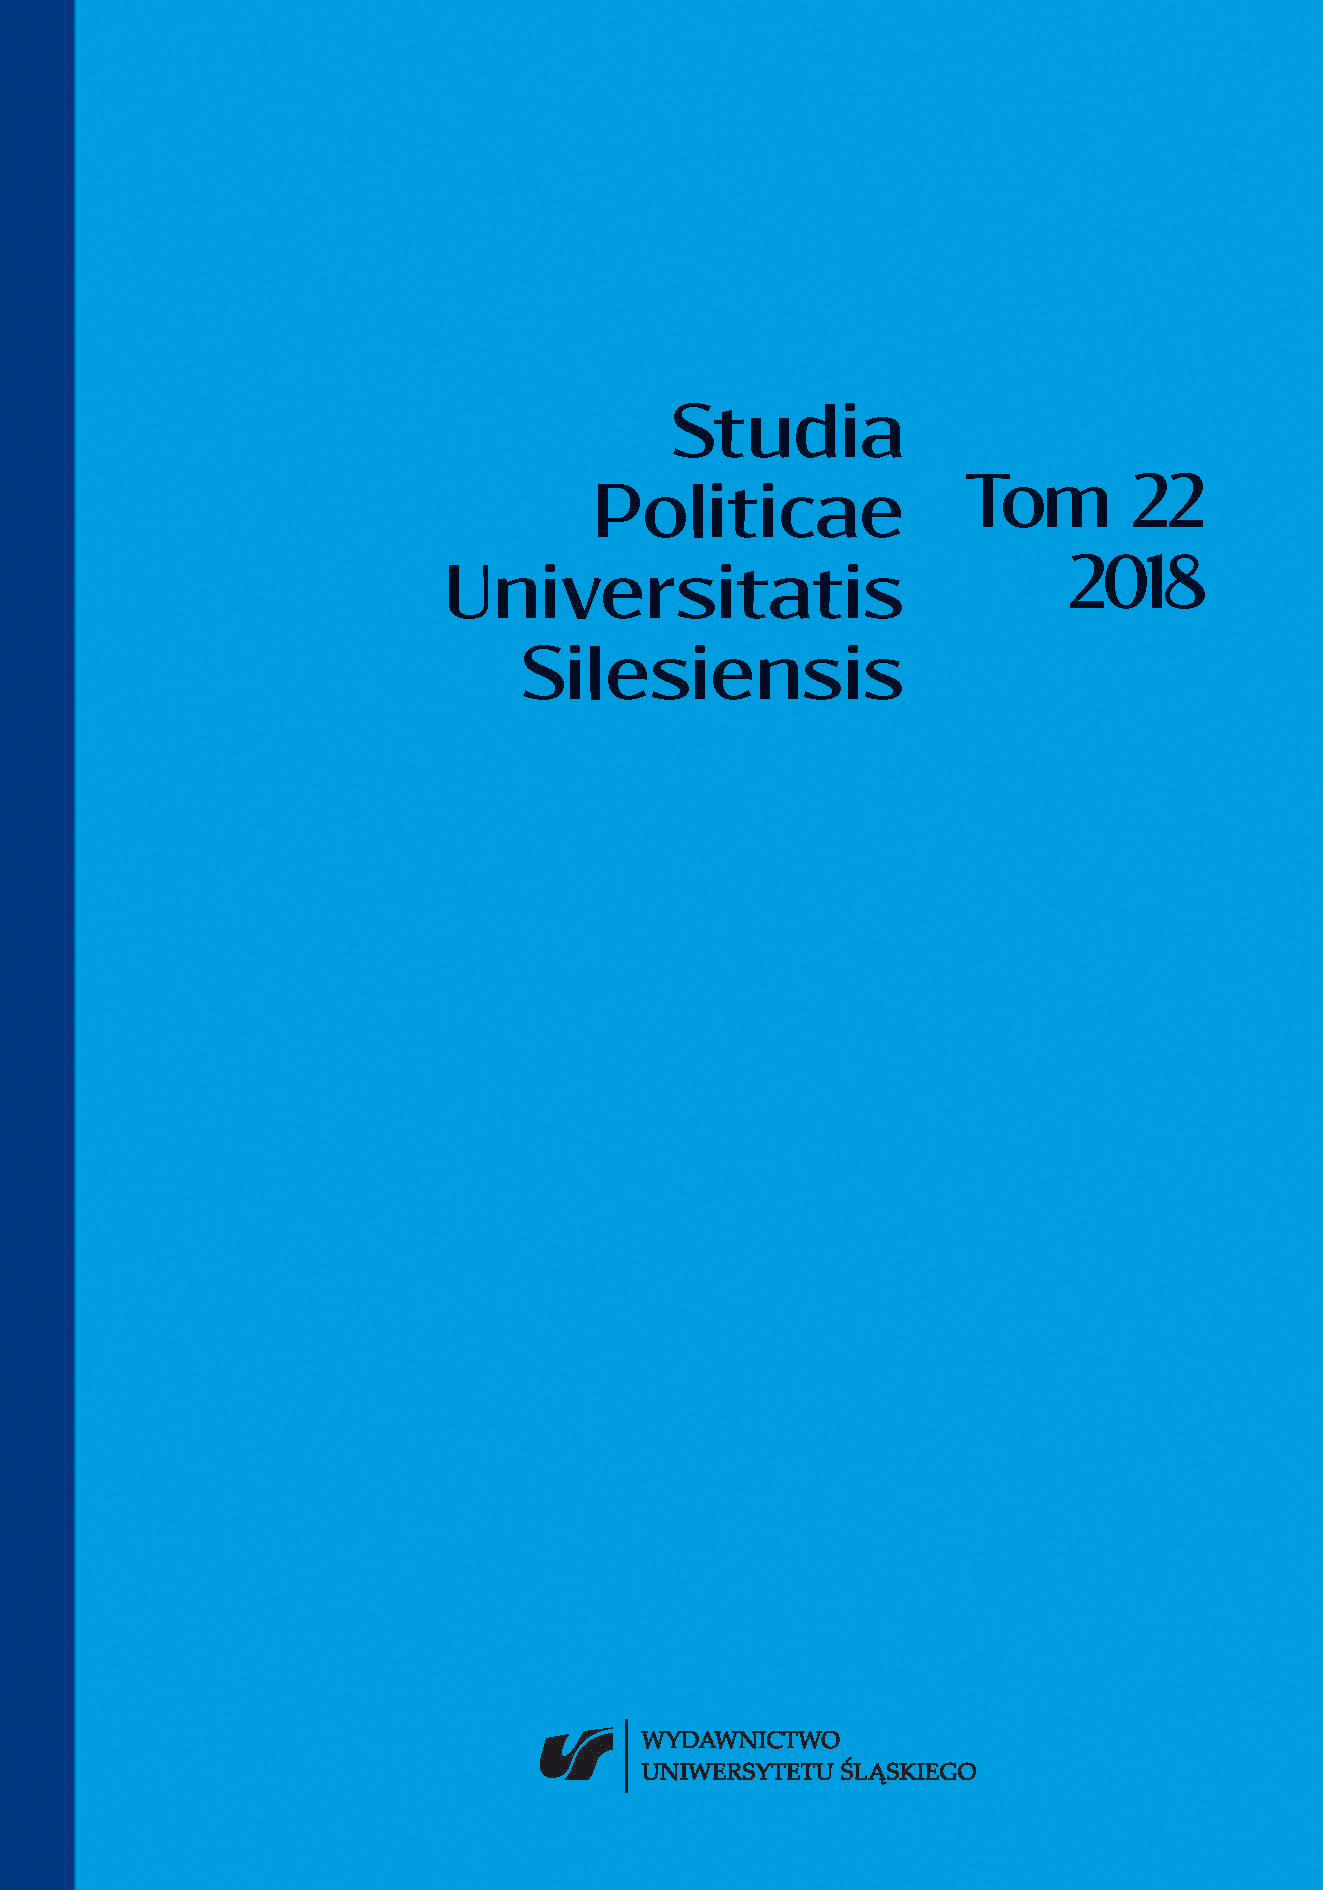 Seniors and senior politics in public policy Cover Image